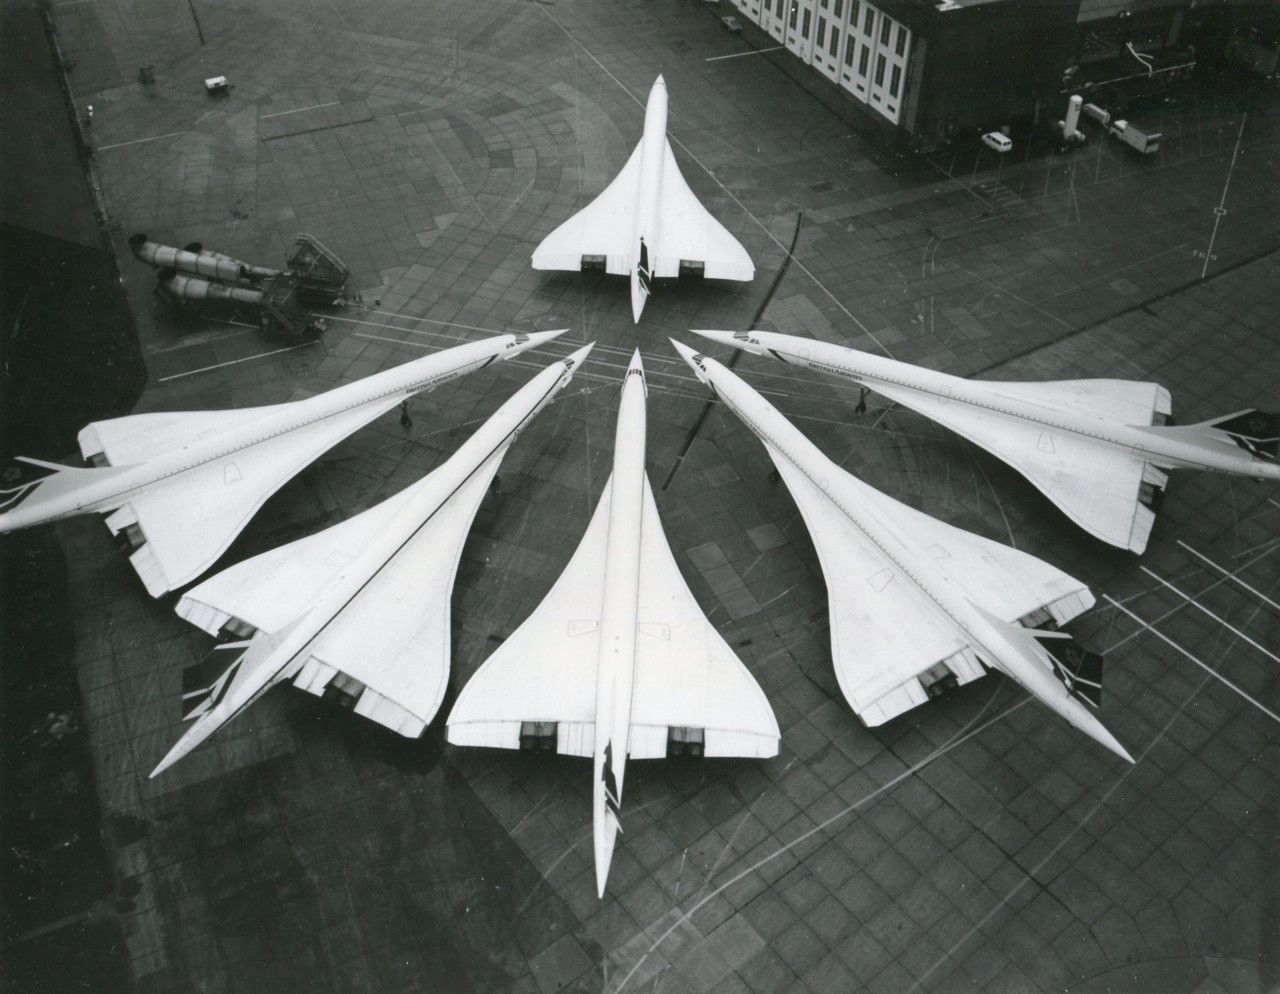 6 British Airways Concordes parked side by side.